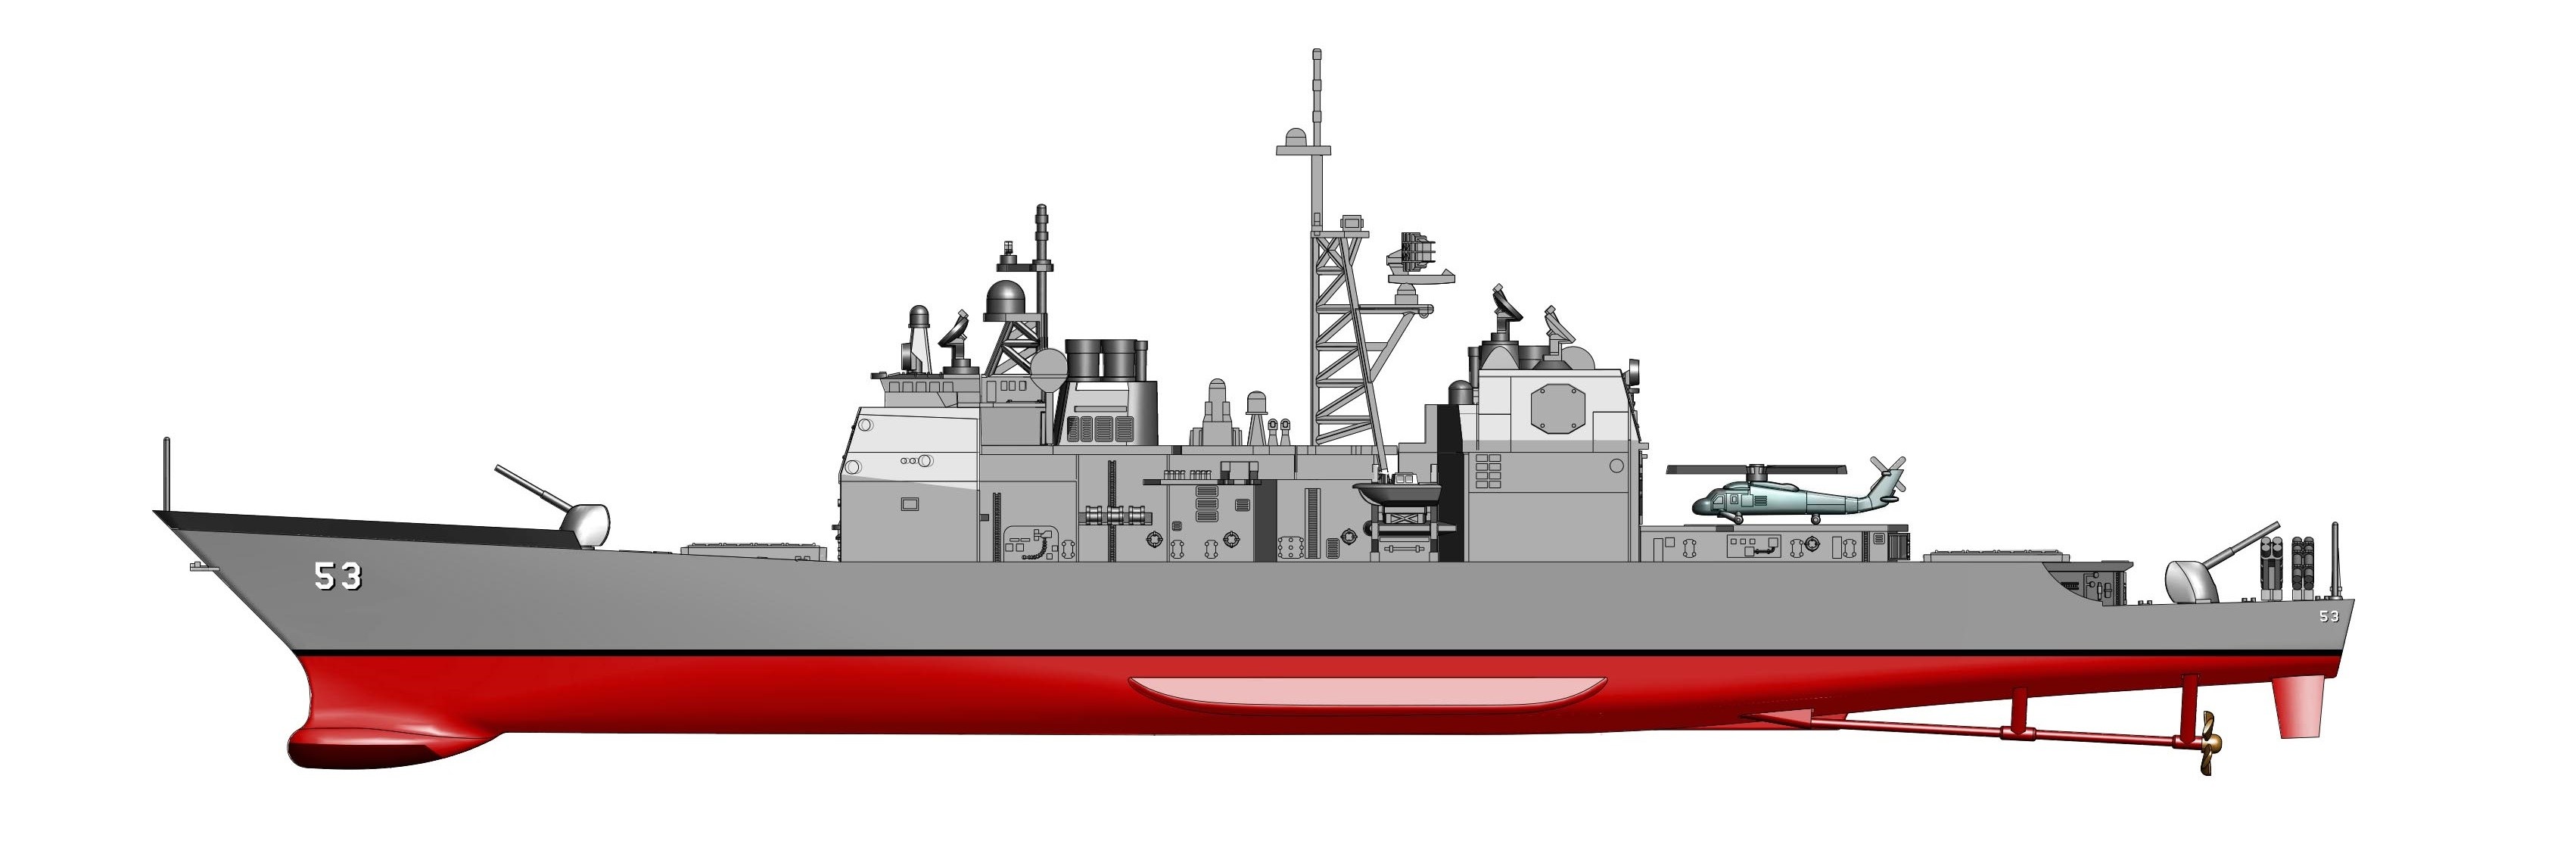 CG-53 USS Mobile Bay HSP1002 Hobby Master 1/700 Ticonderoga-class Cruiser USN